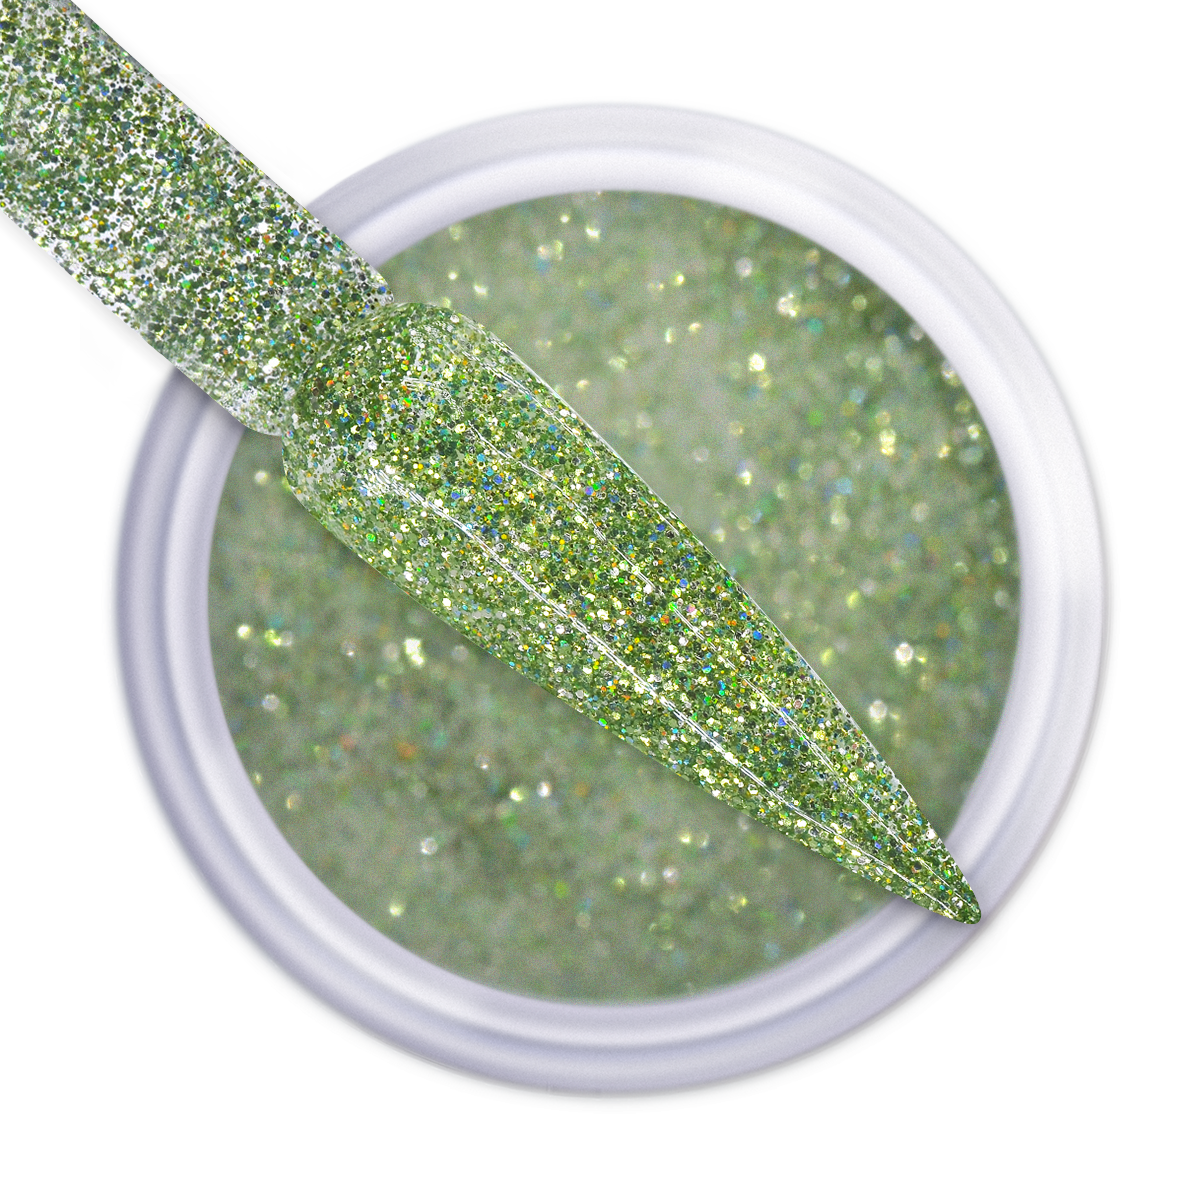 Dip & Dap Powder - Cosmic Glitter - CG35 Beauty Bounty